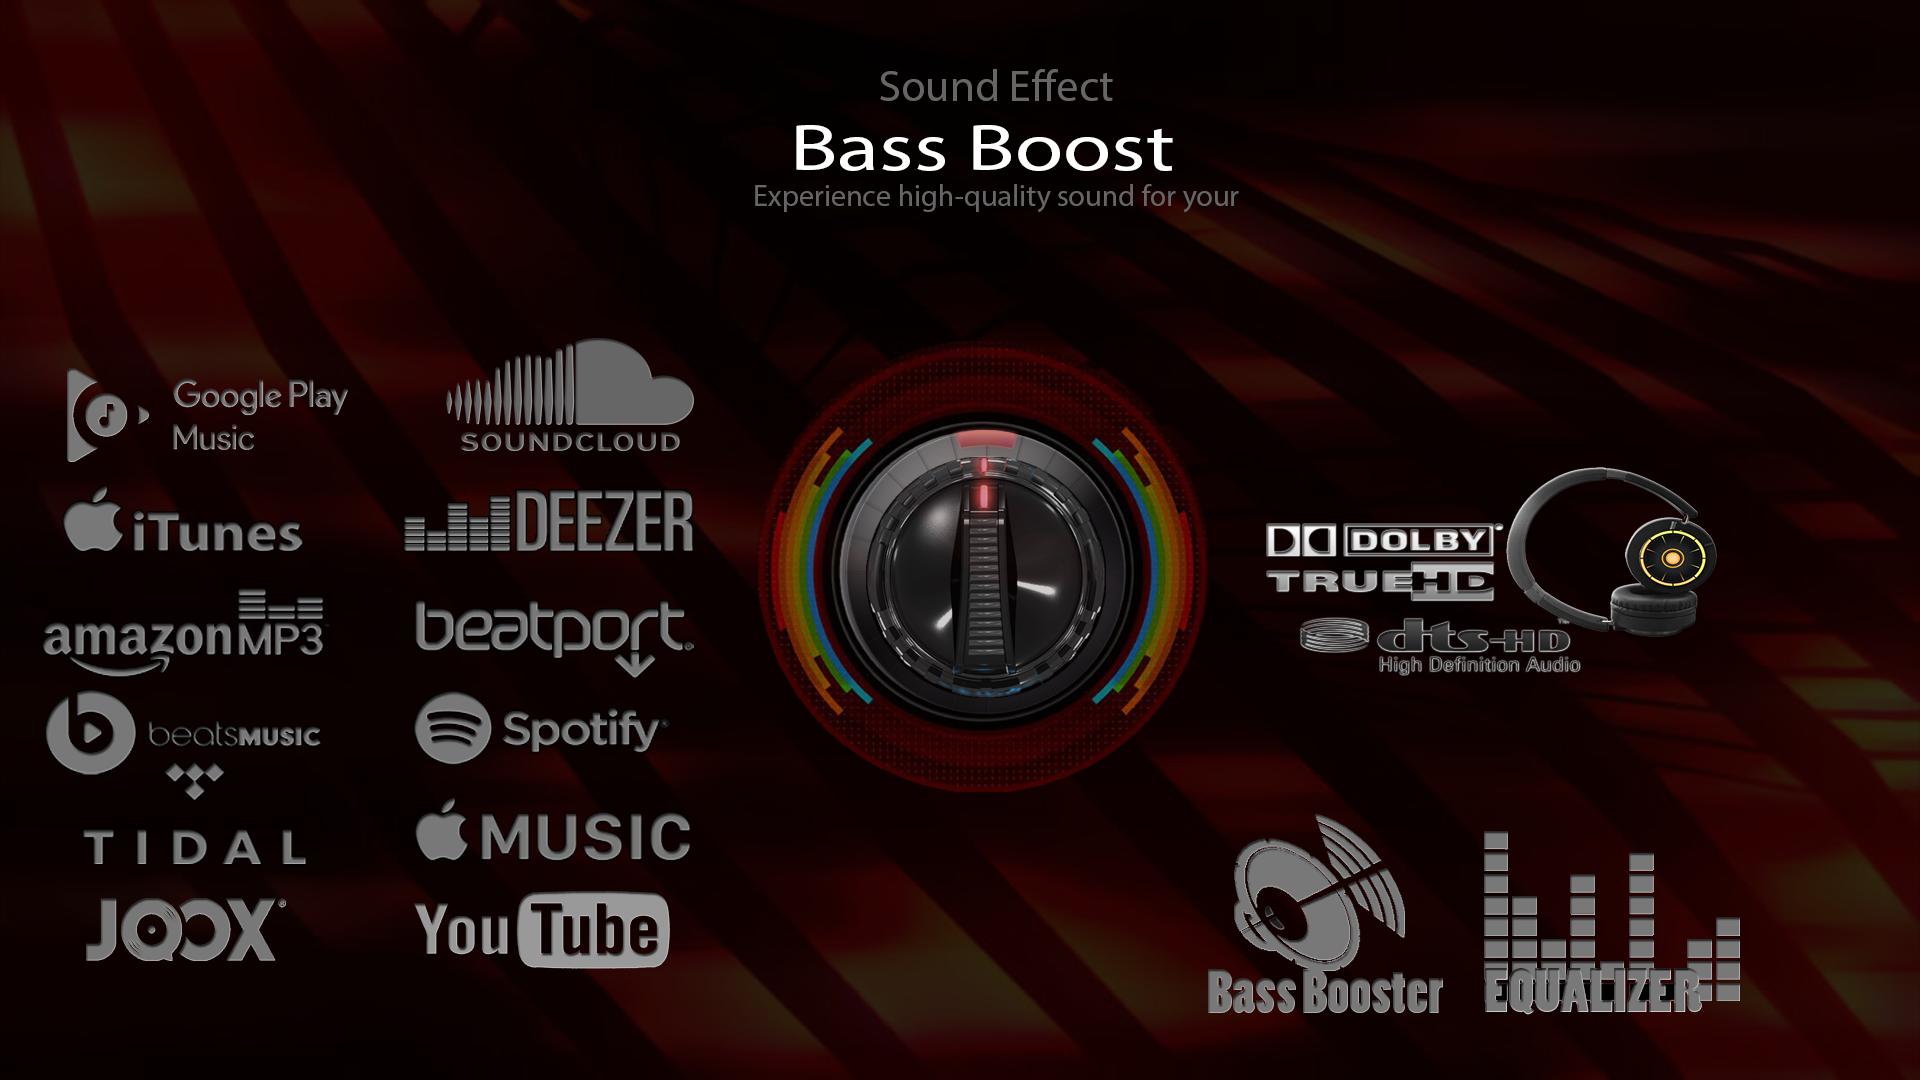 Bass Booster. Bass Boost EQ. Бас буст виндовс 7. EQ Boost басс. Effects test